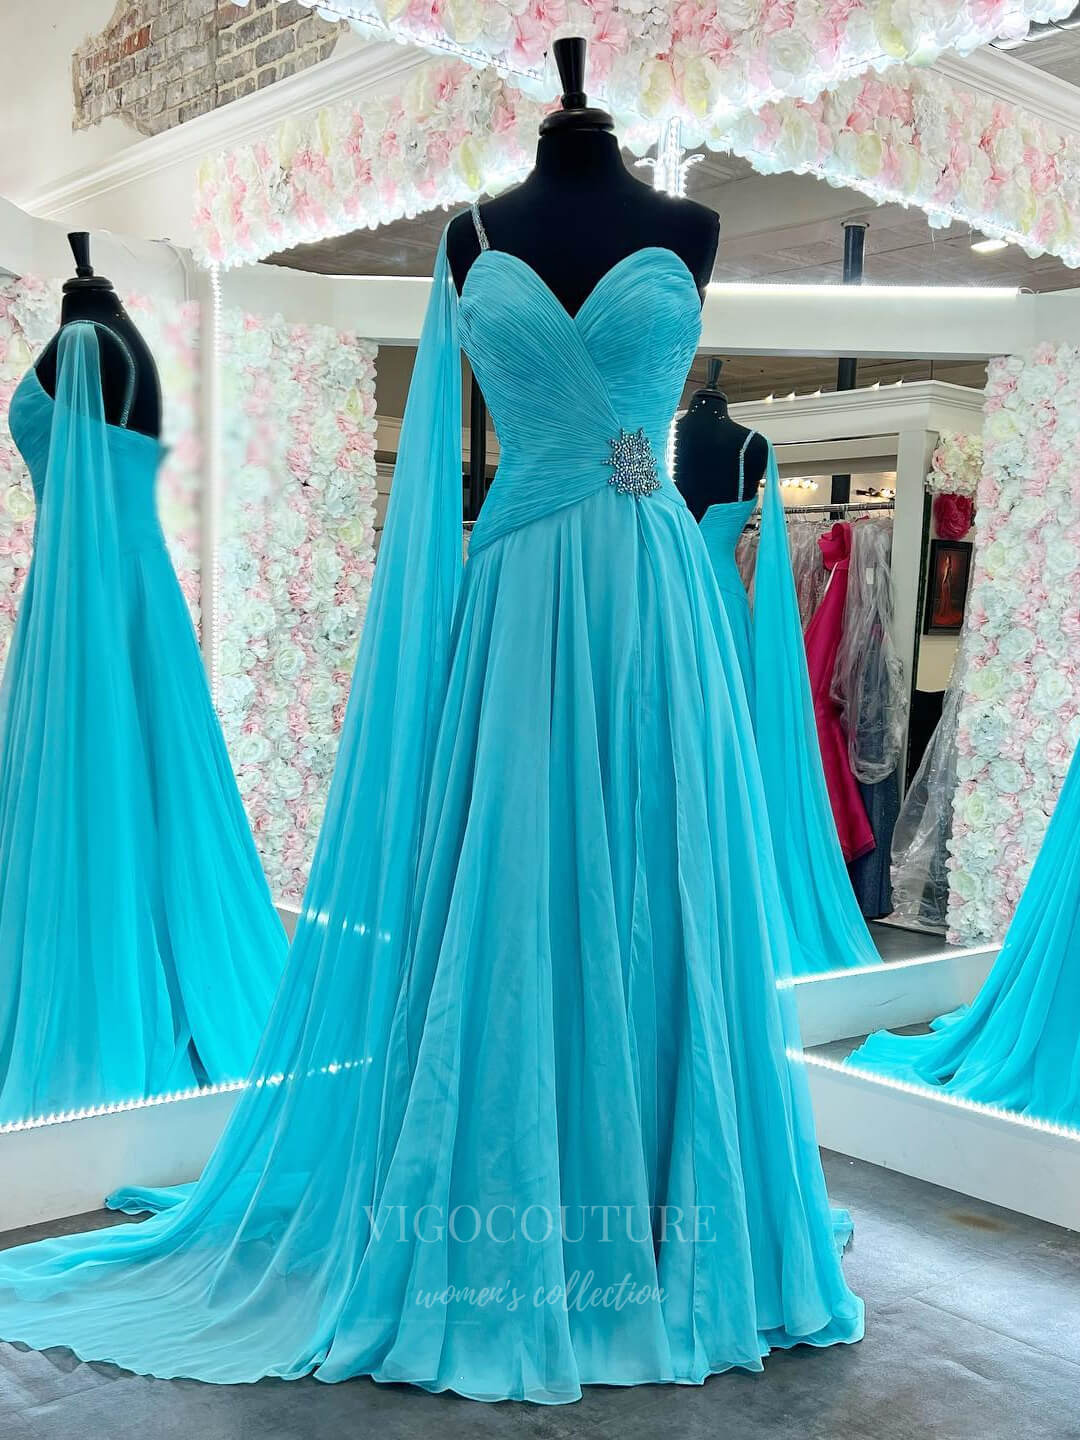 vigocouture-Light Blue Pleated Chiffon One Shoulder Prom Dress 20969-Prom Dresses-vigocouture-Light Blue-US2-